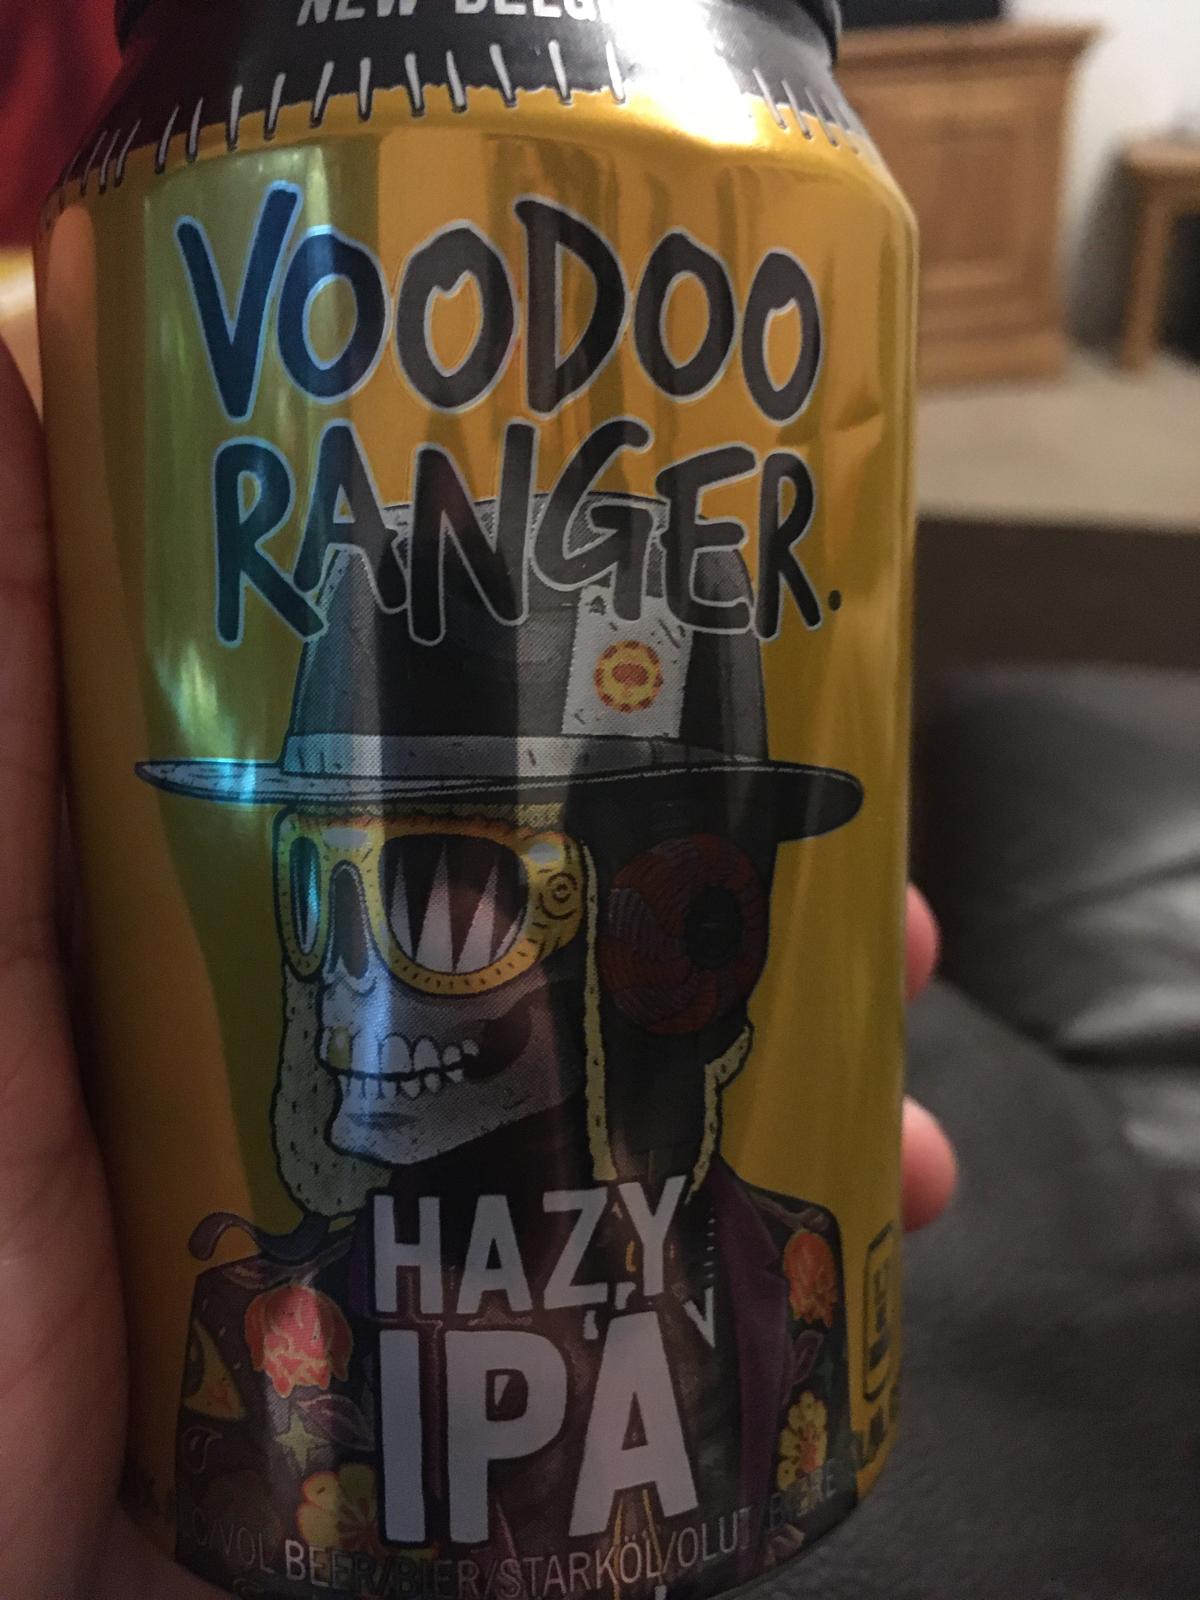 Voodoo Ranger Hazy IPA